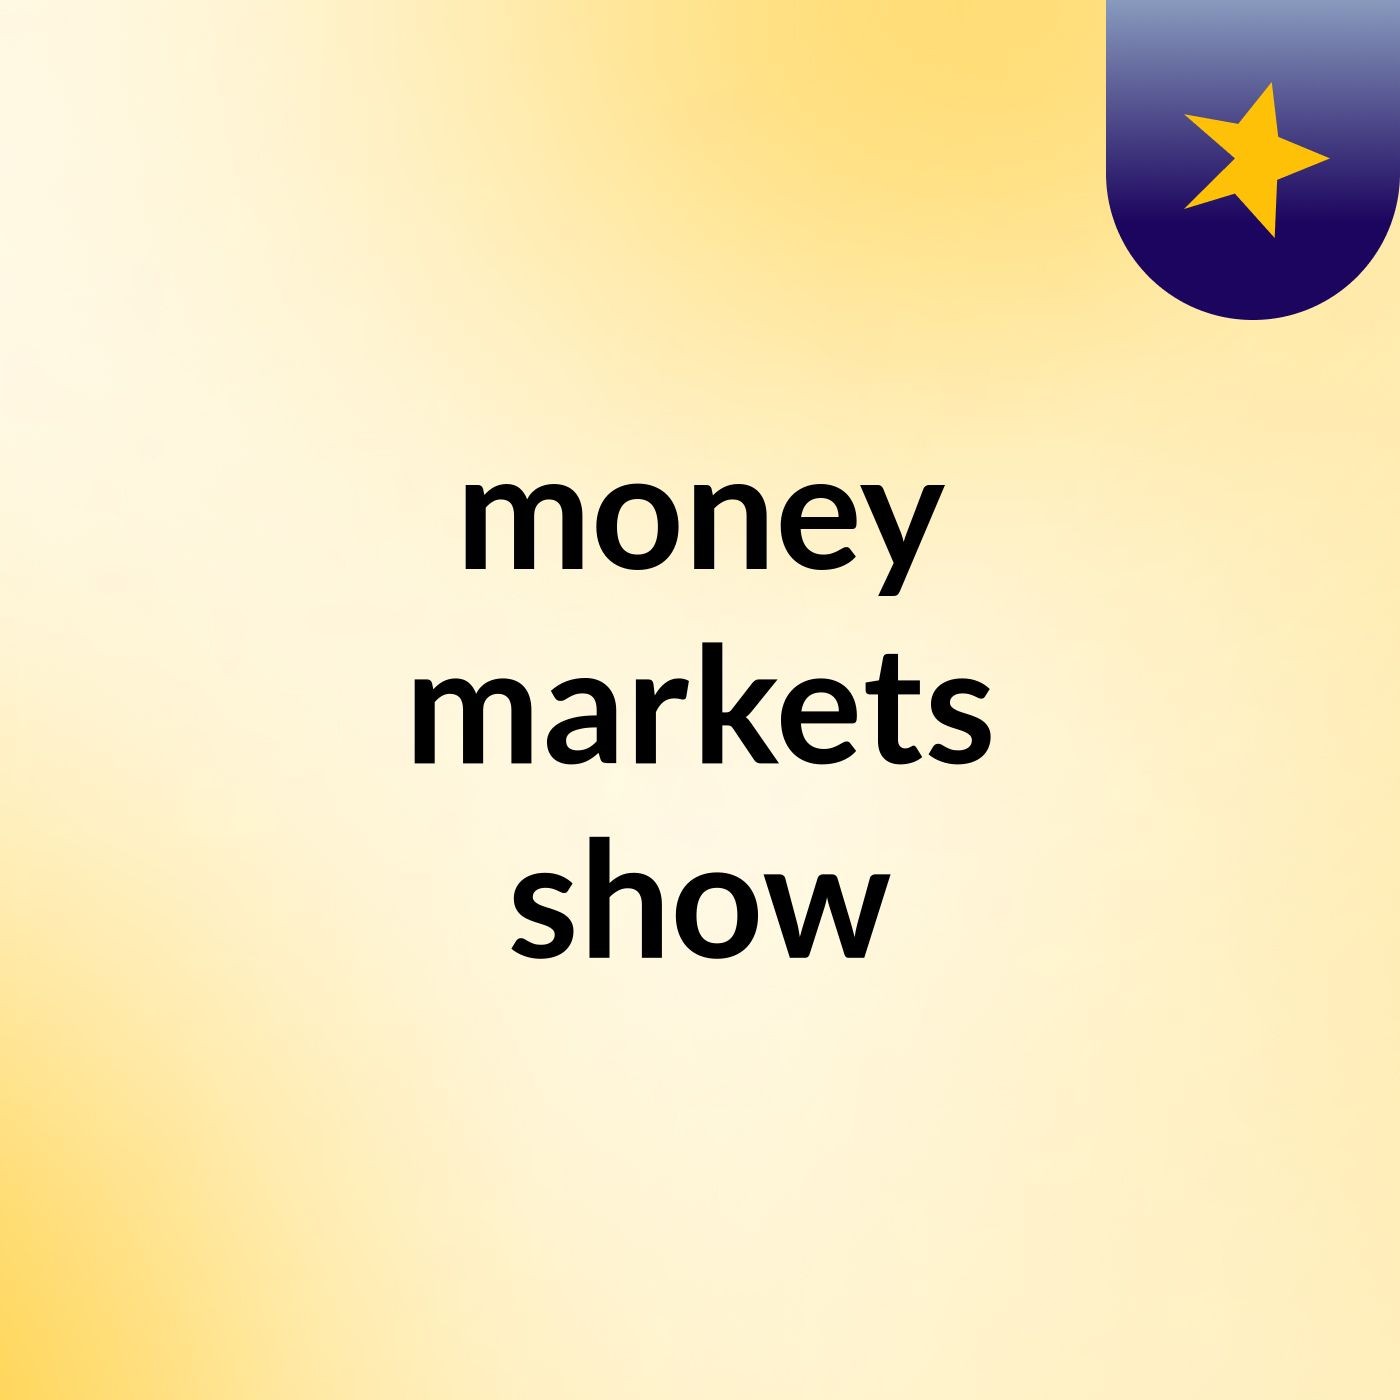 money markets show